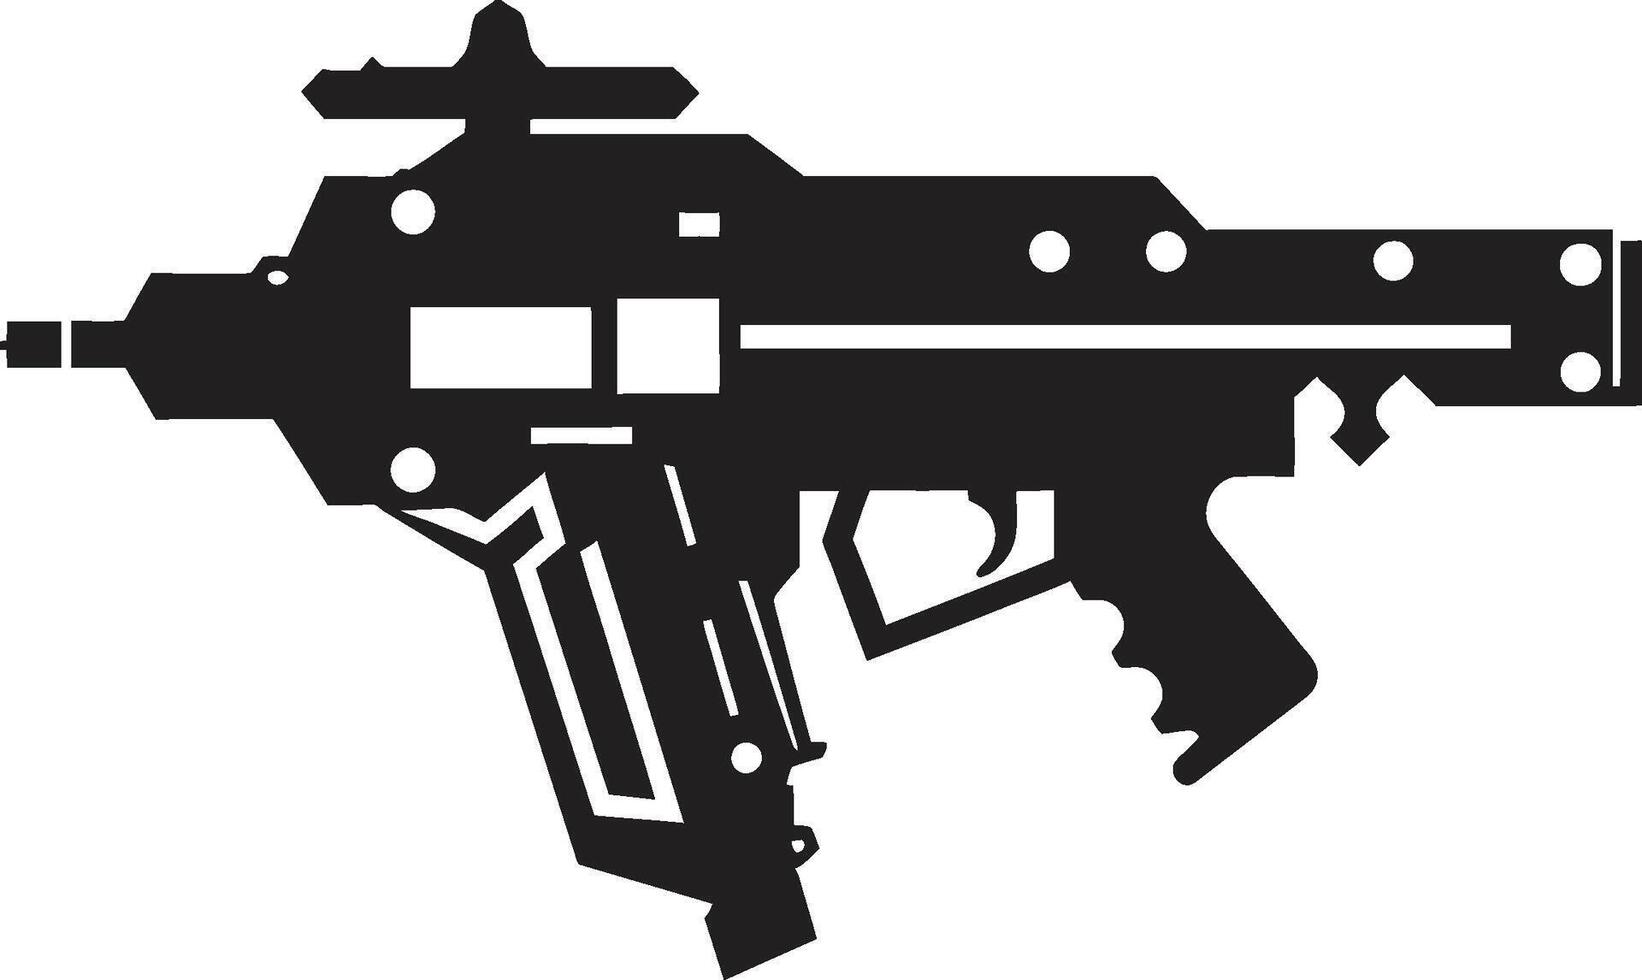 Imaginary Invader Dynamic Black Icon featuring Toy Gun Logo Lilliputian Lawkeeper Sleek Vector Design of a Toy Gun in Black